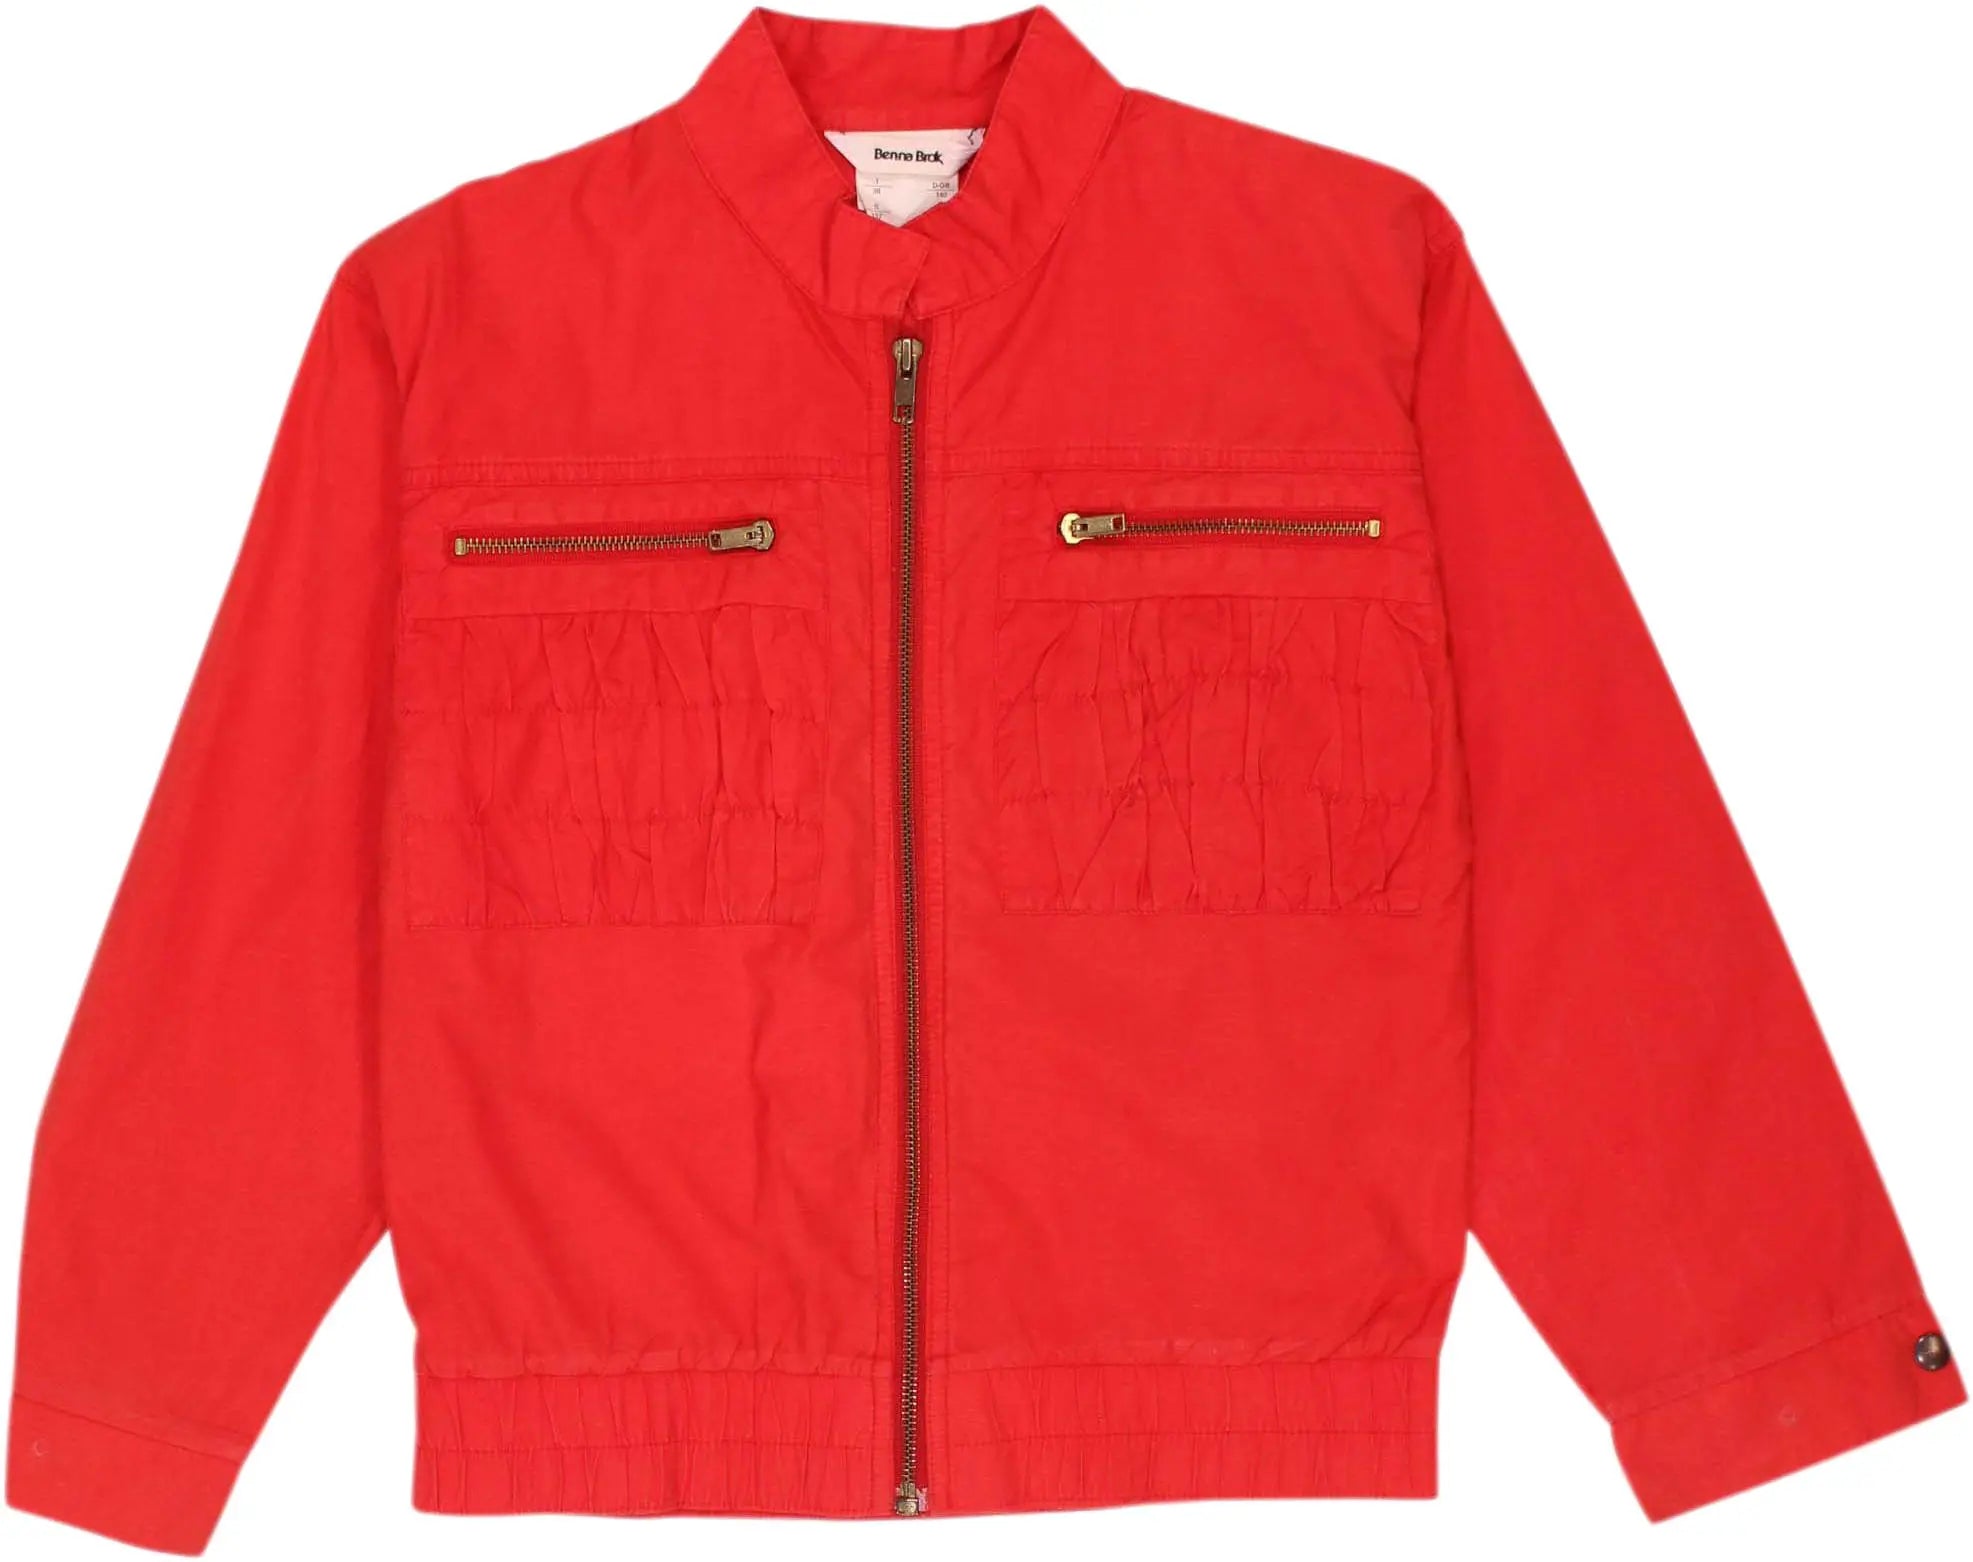 Benna Brok - Red Jacket- ThriftTale.com - Vintage and second handclothing